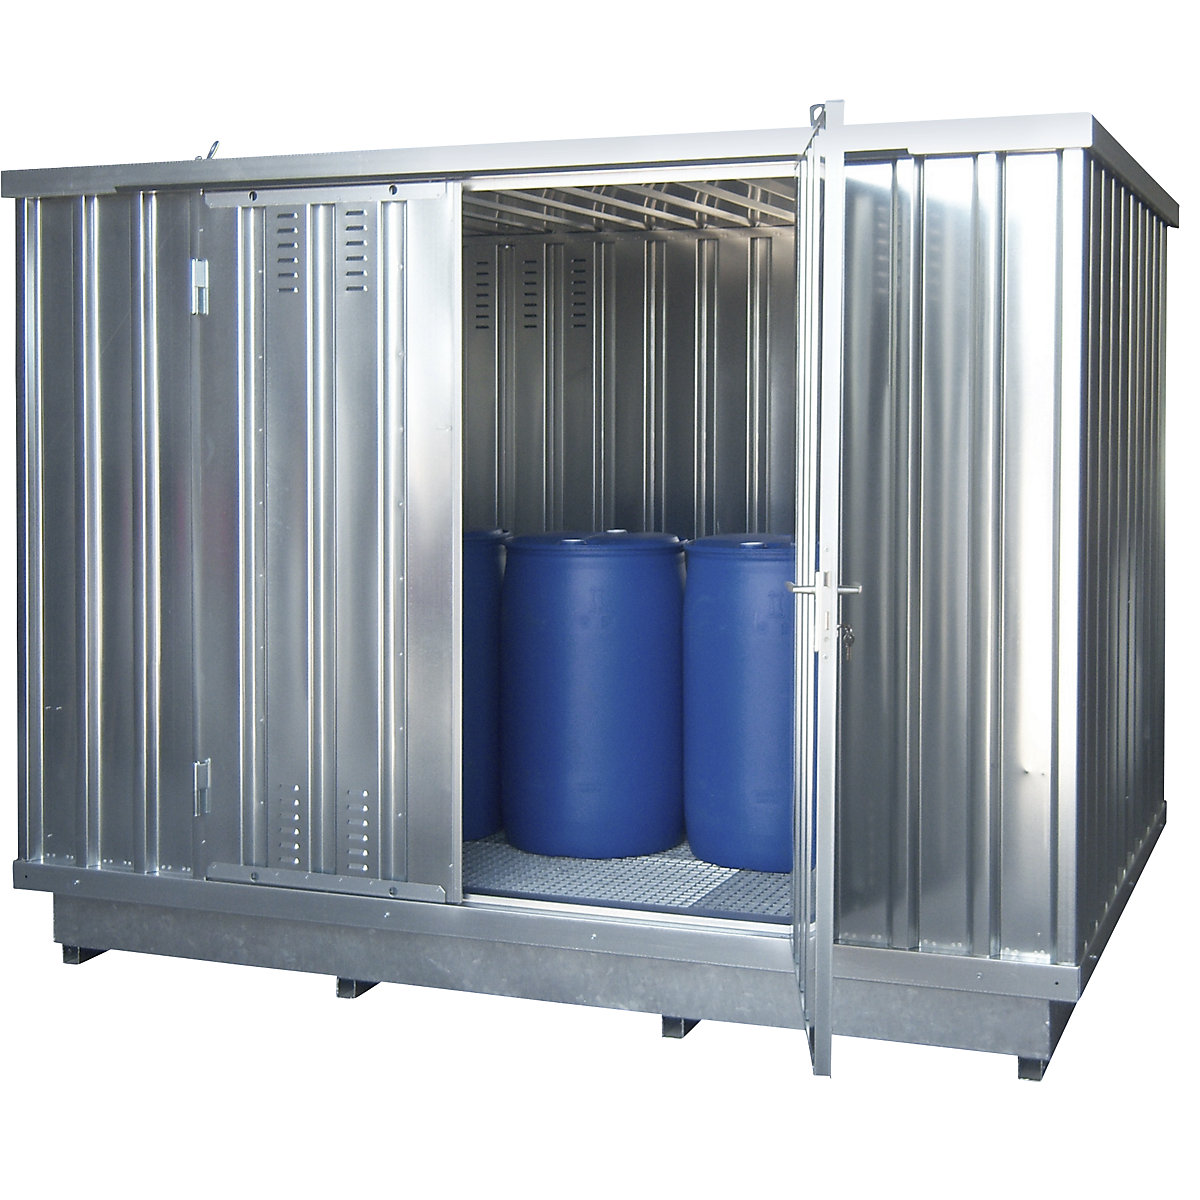 Hazardous goods storage container for water hazardous media, external HxWxD 2385 x 3075 x 2075 mm, zinc plated